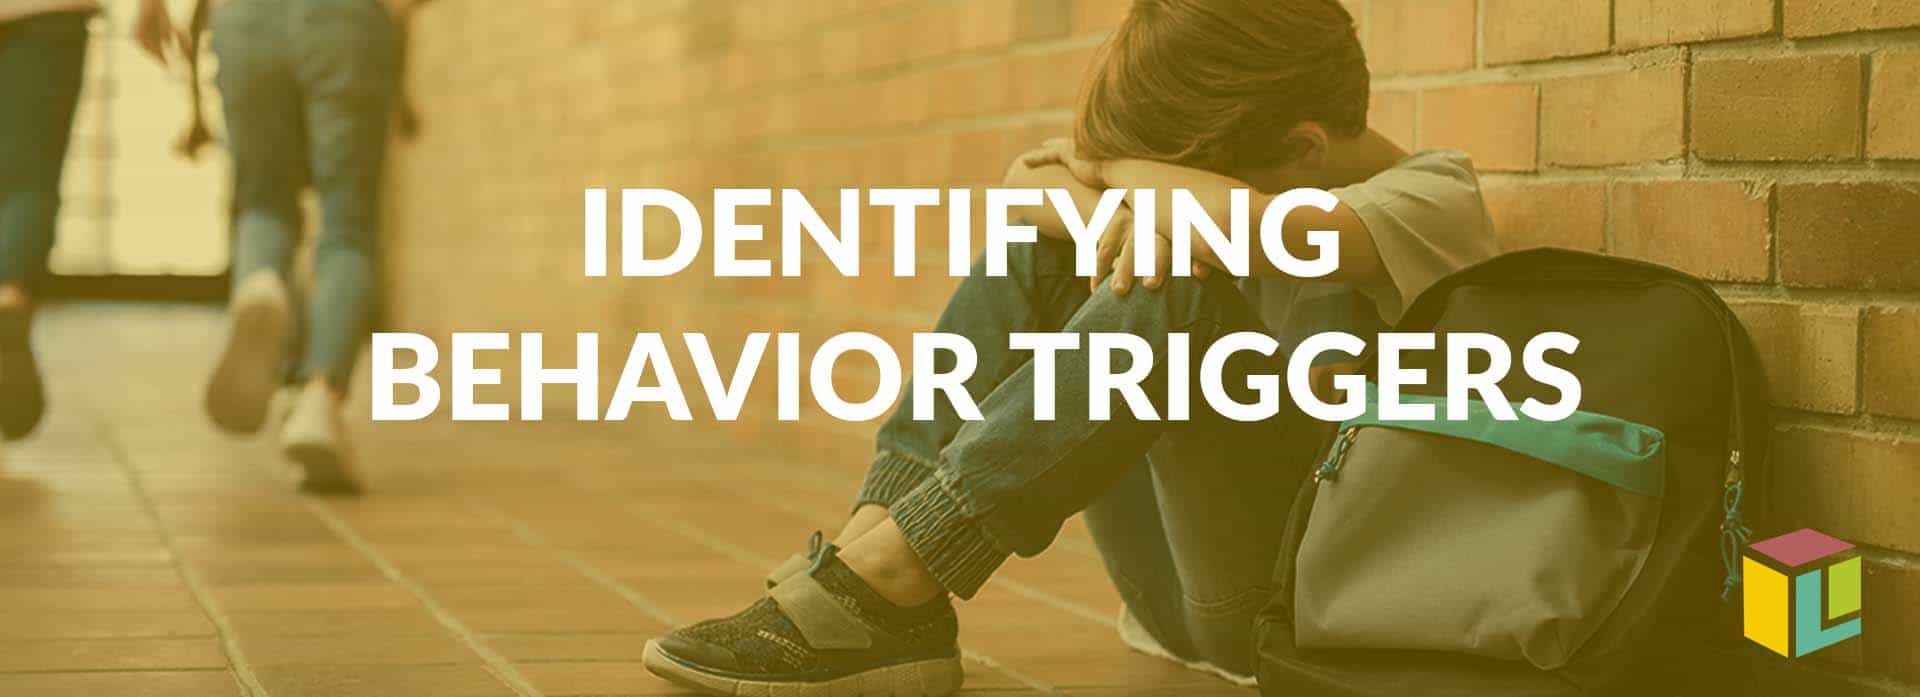 Identify Behavior Triggers To Promote Positive Behavior Identify Behavior Triggers To Promote Positive Behavior Identify Behavior Triggers To Promote Positive Behavior Identify Behavior Triggers To Promote Positive Behavior